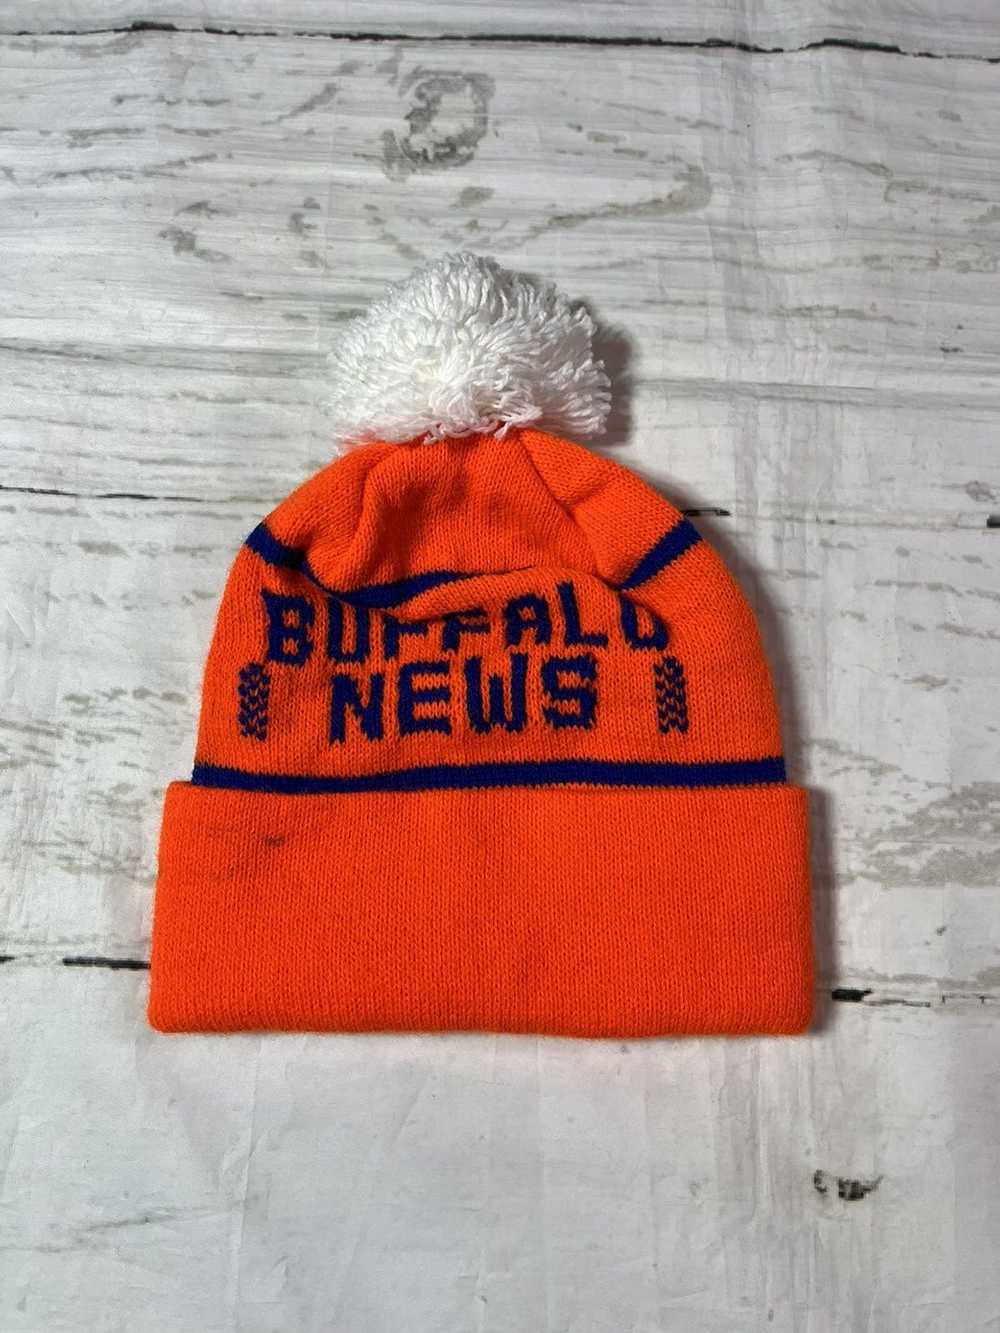 Vintage Vintage 1990s Buffalo News Winter Hat Kni… - image 2